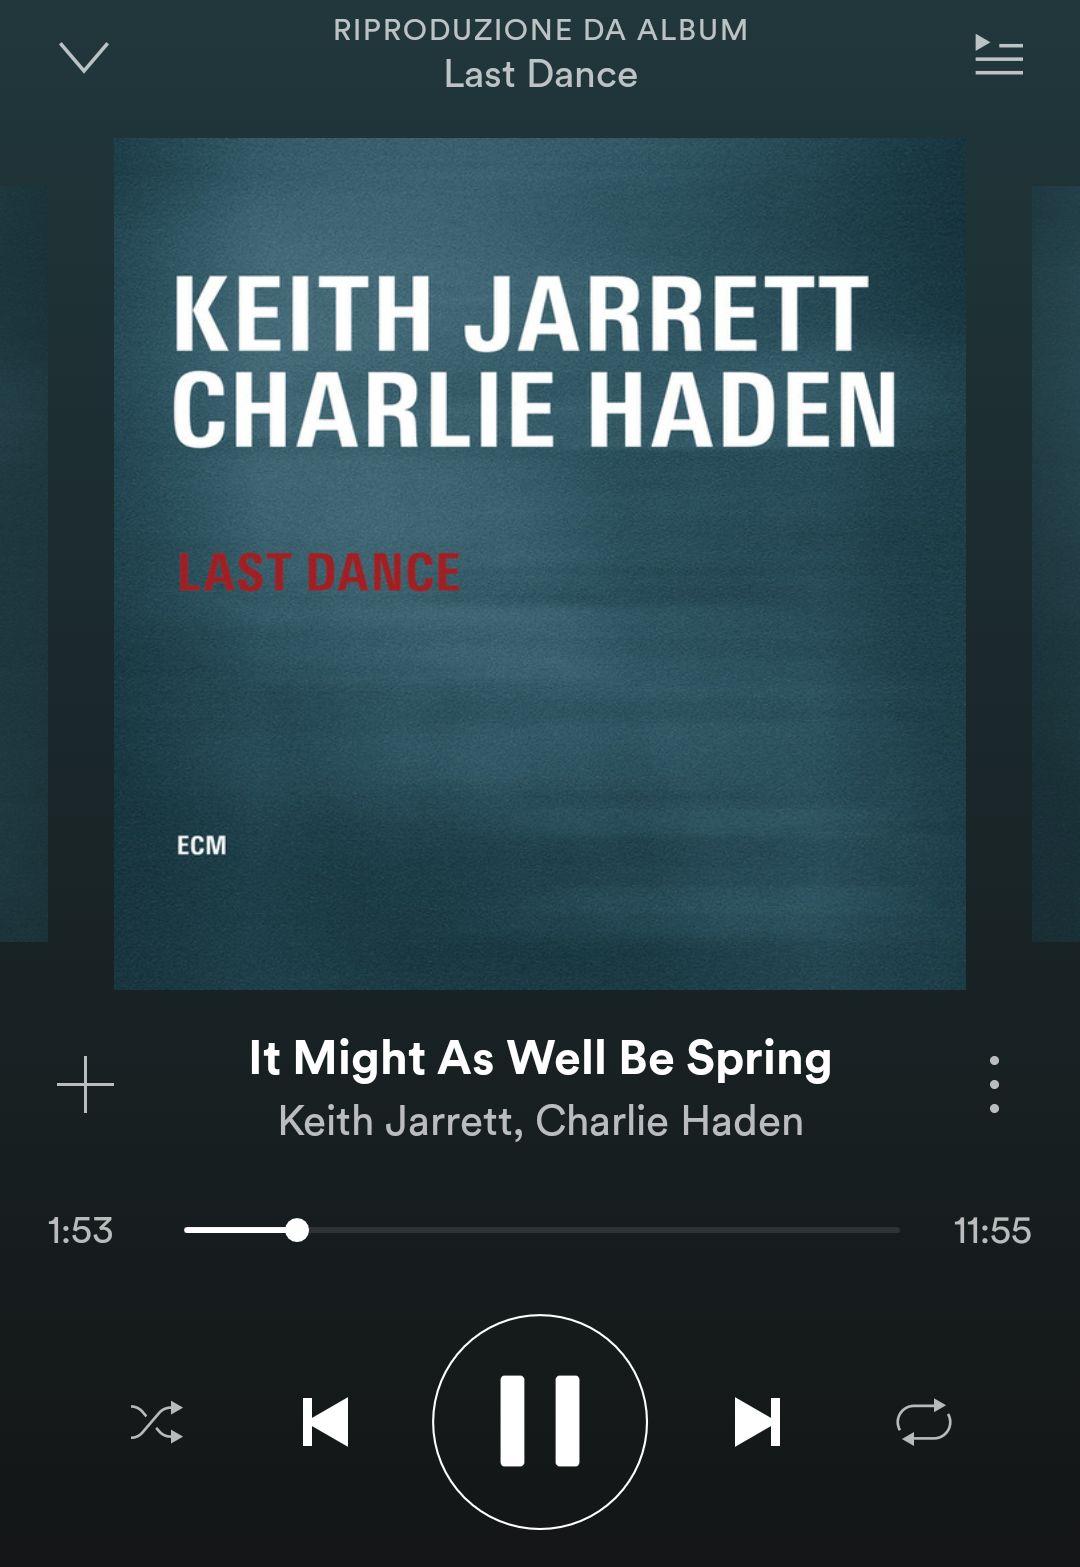 Keith Jarrett e Charlie Haden - Last Dance su Spotify